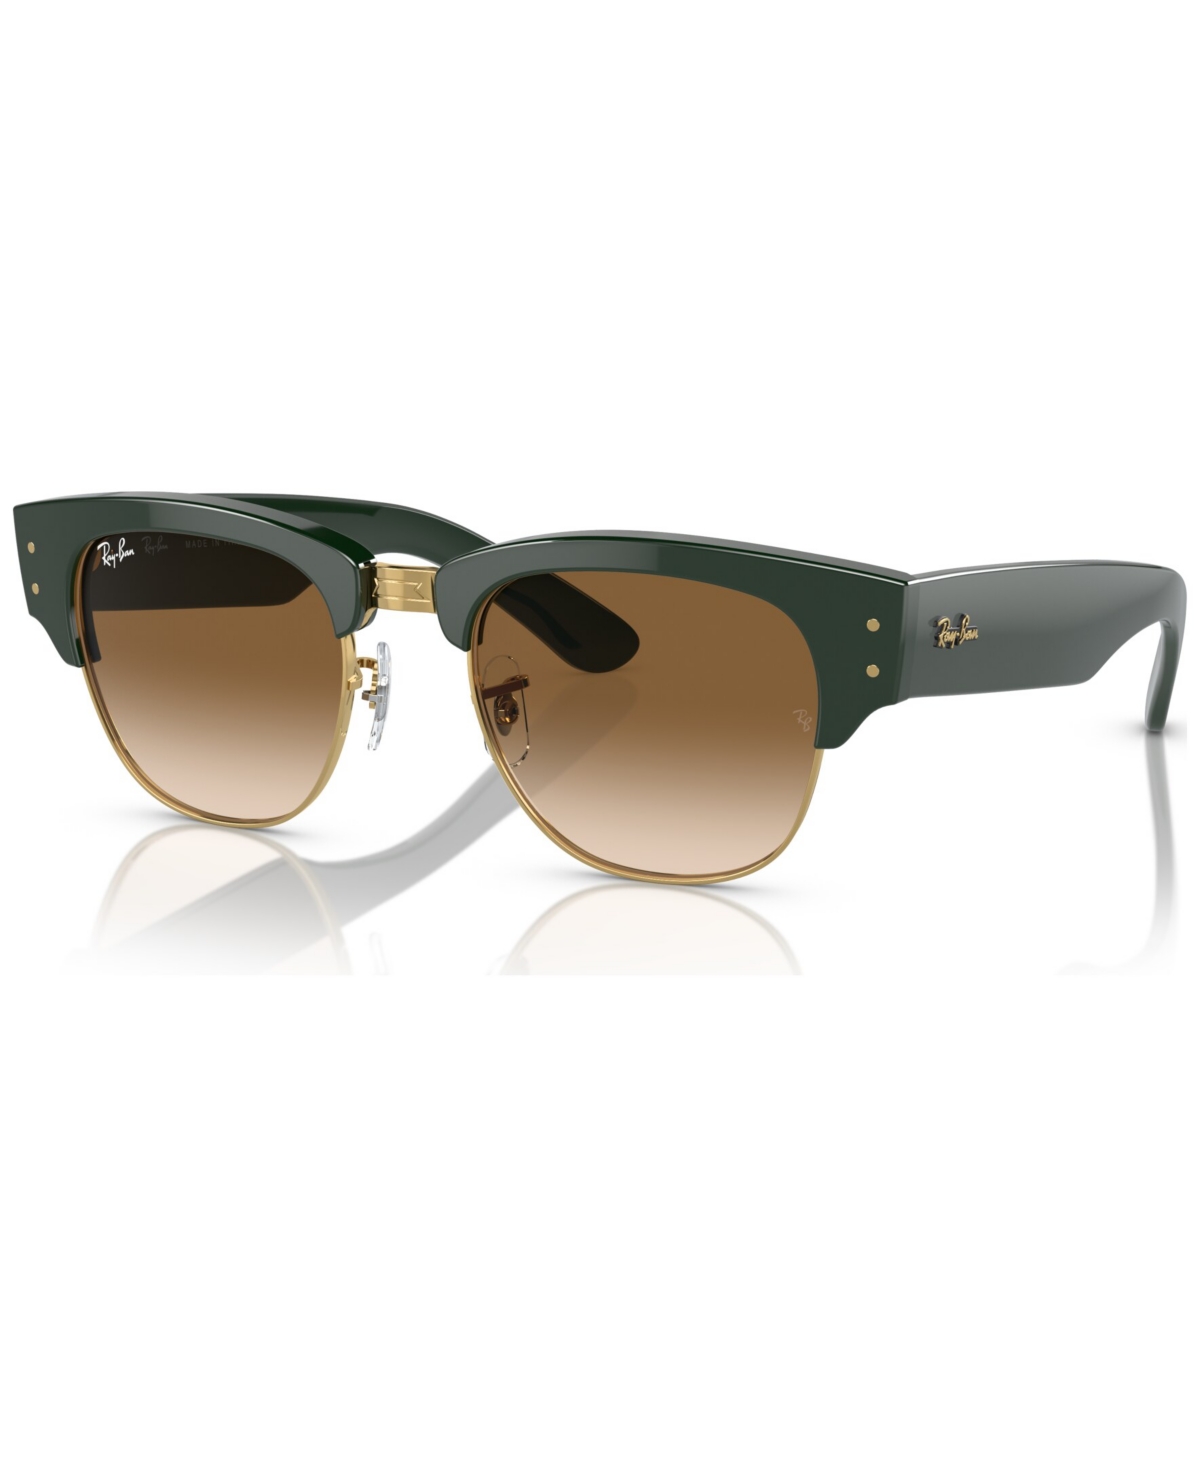 Unisex Sunglasses, Mega Clubmaster - Green on Gold-Tone